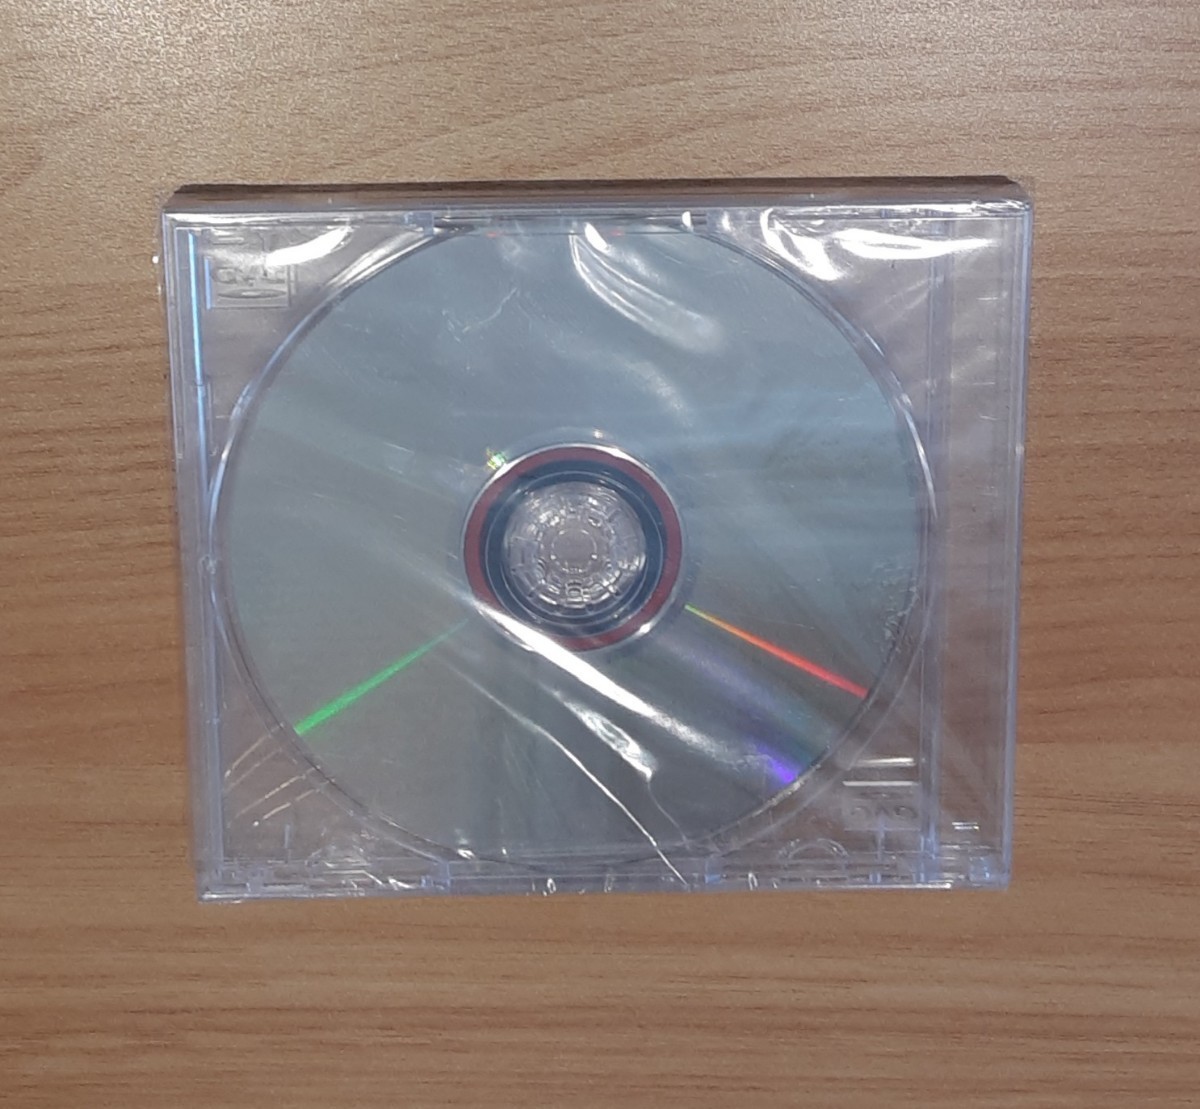 Panasonic カーナビゲーションシステム 全国詳細版 2000-2001年度版 DVD ROM CY-ET100D CAR NAVIGATION SYSTEM デジタルマップ カーナビ用_画像2